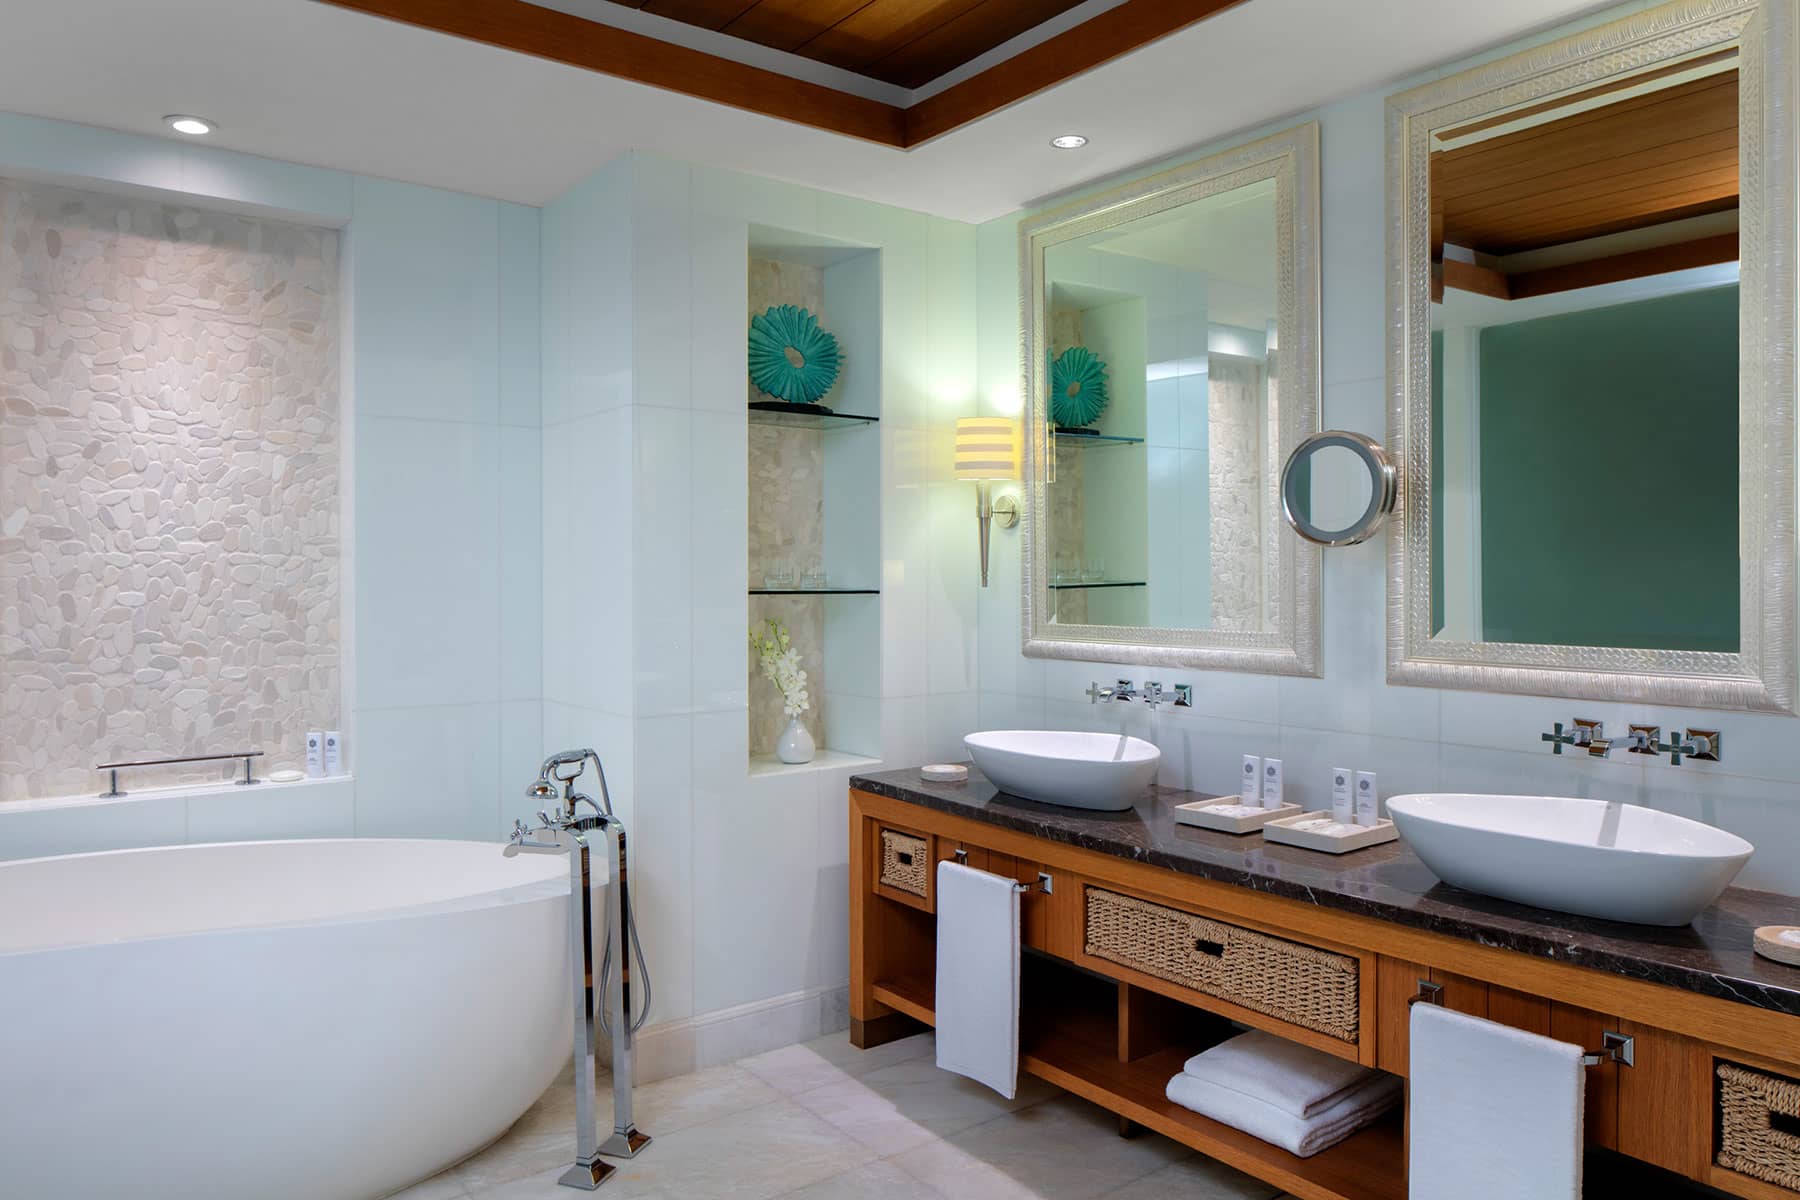 Hotel & Resort Bathroom Photography: St. Regis Saadiyat Island, Abu Dhabi, UAE.